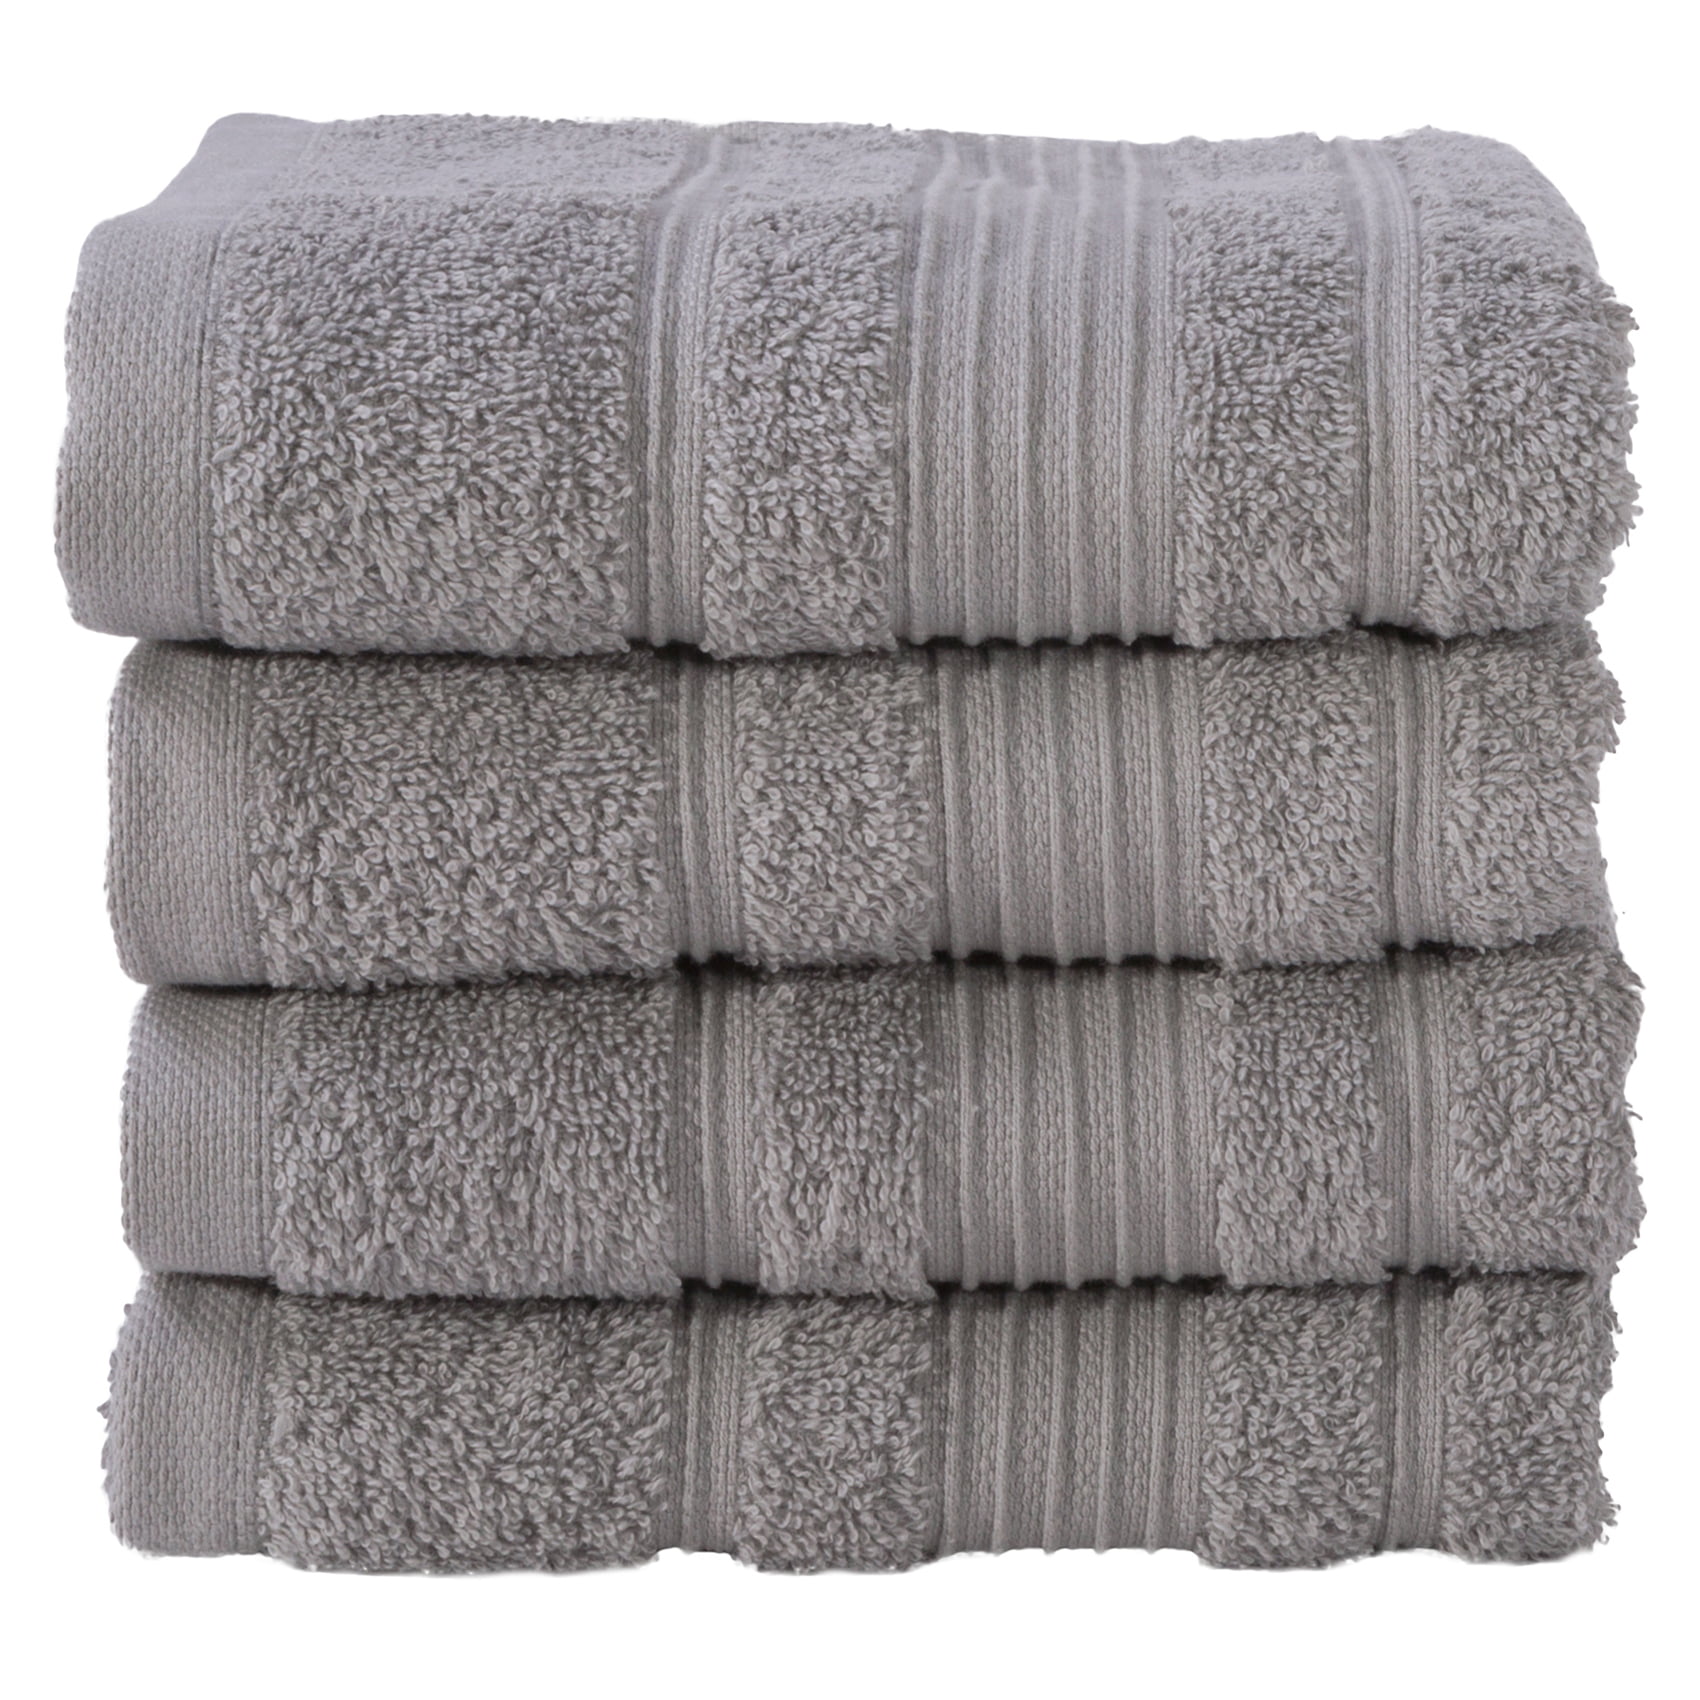 Cotton Paradise Bath Towels, 100% Turkish Cotton 27x54 inch 4 Piece Bath  Towel Sets for Bathroom, Soft Absorbent Towels Clearance Bathroom Set, Sky